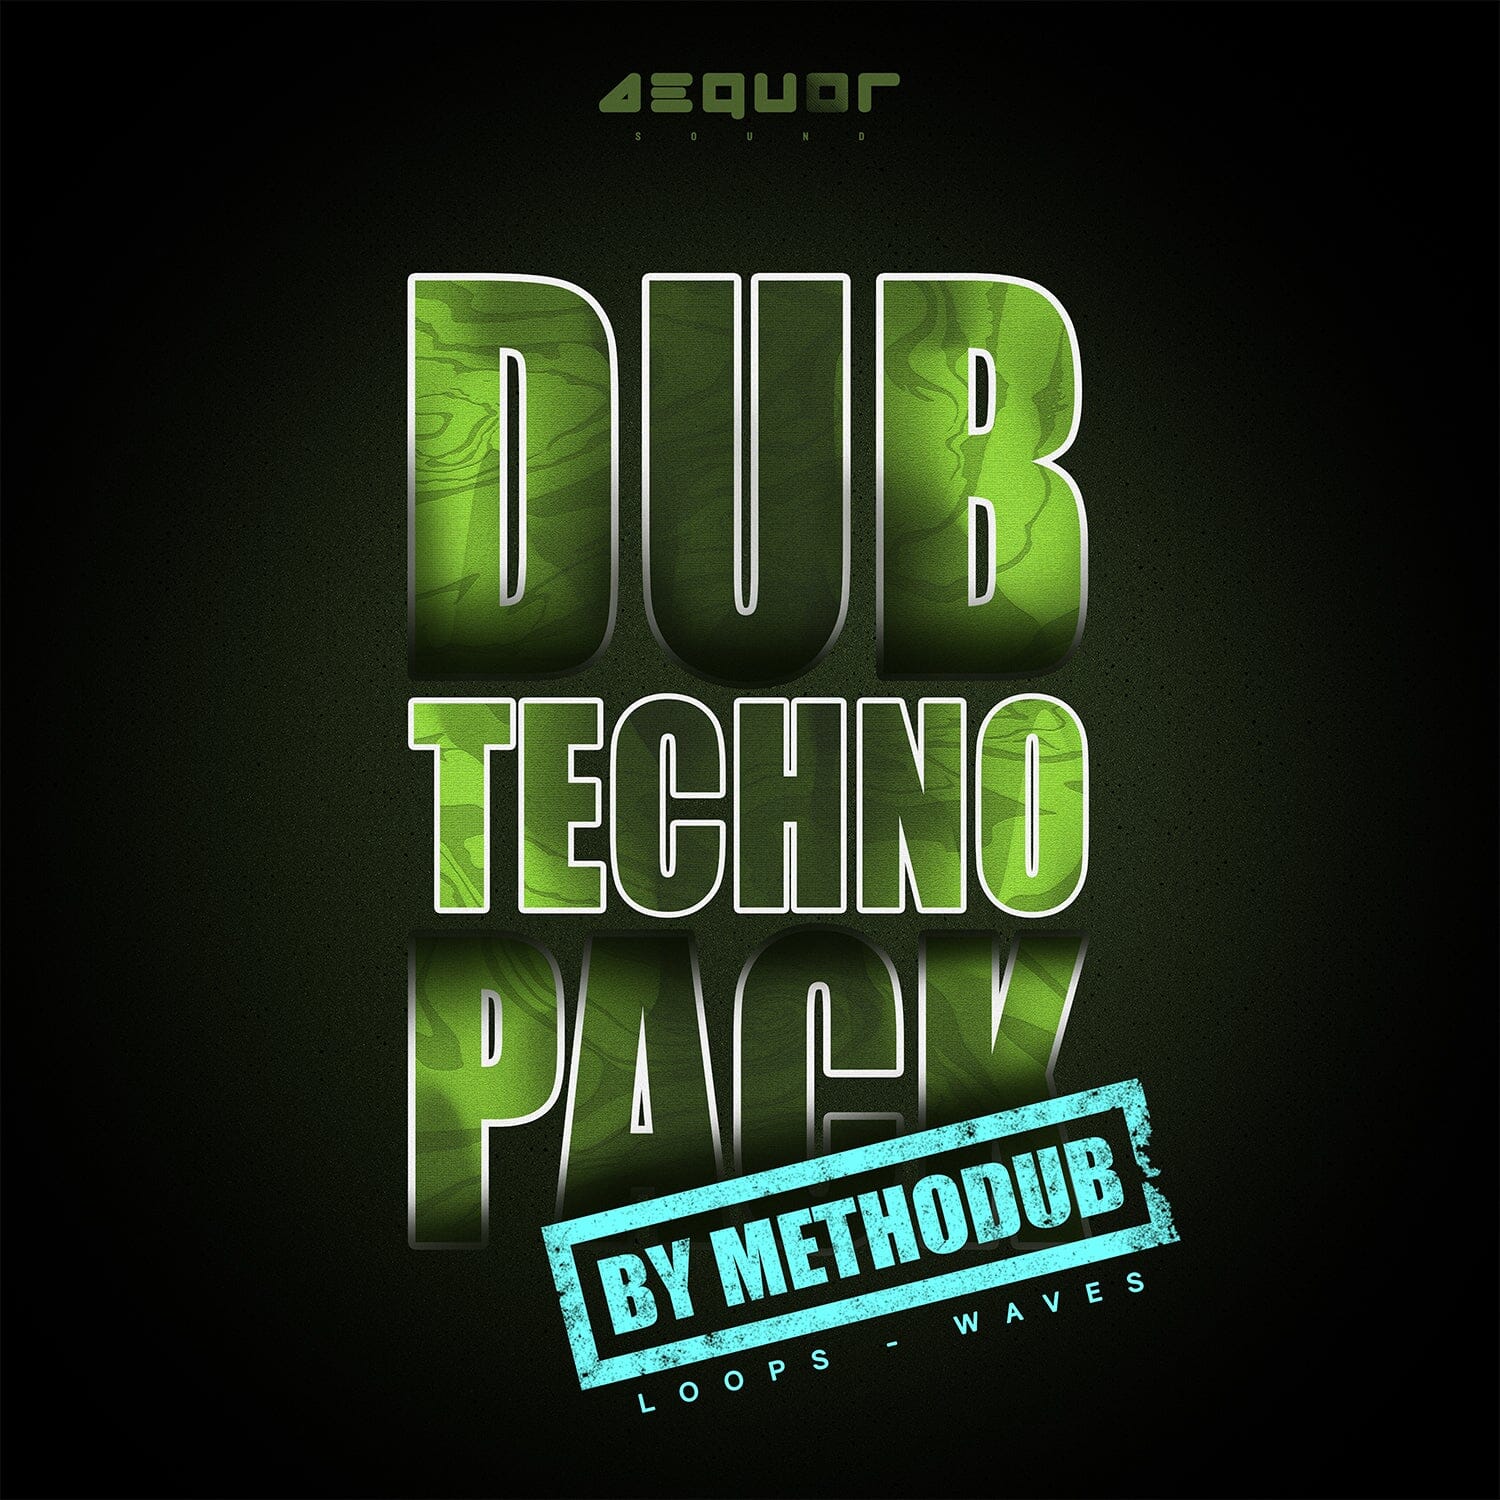 Dub Techno Pack </br> by Methodub Sample Pack Aequor Sound